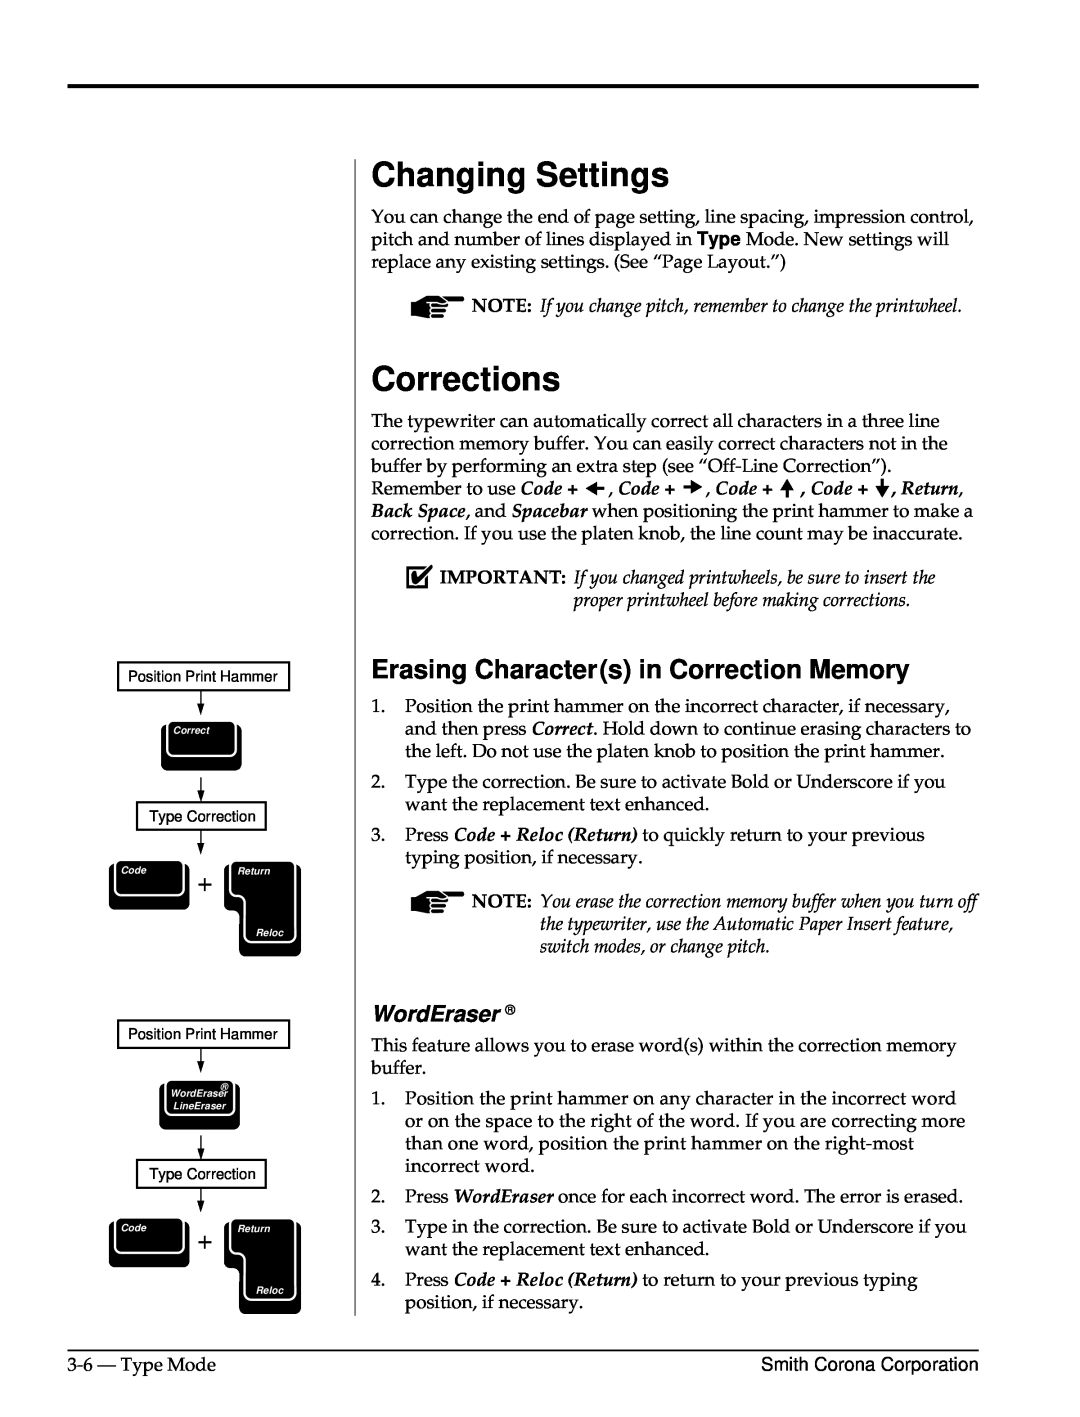 Smith Corona Computer Keyboard manual Changing Settings, Corrections, Erasing Characters in Correction Memory, WordEraser 